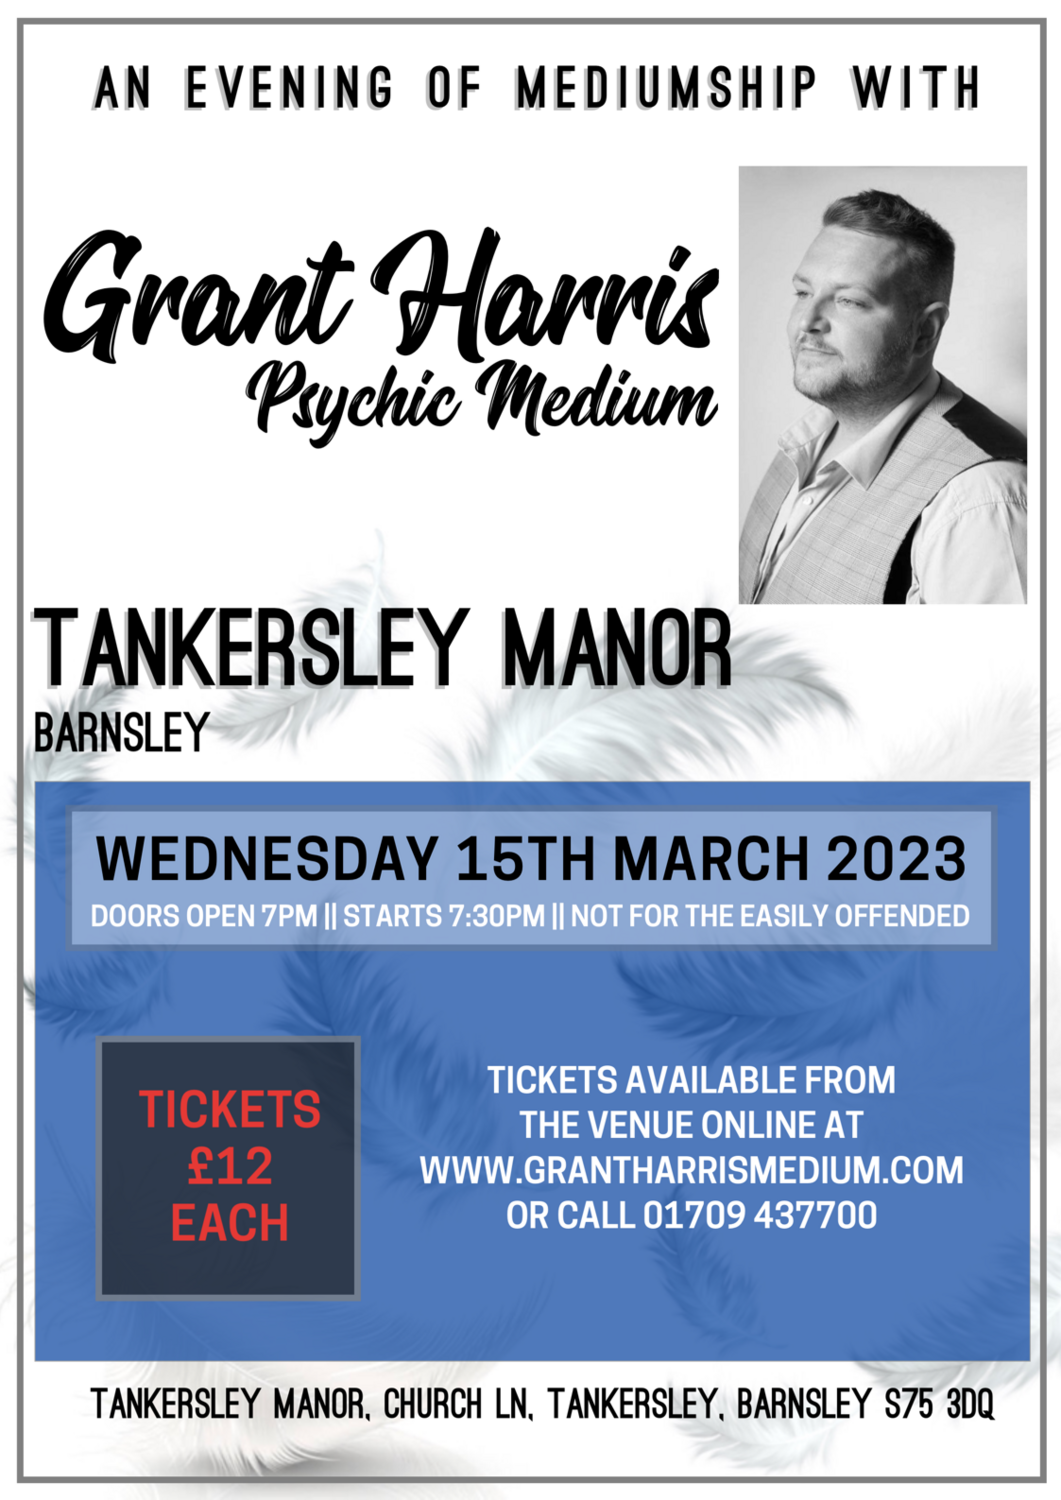 Tankersley Manor, Barnsley, Wednesday 15th March 2023